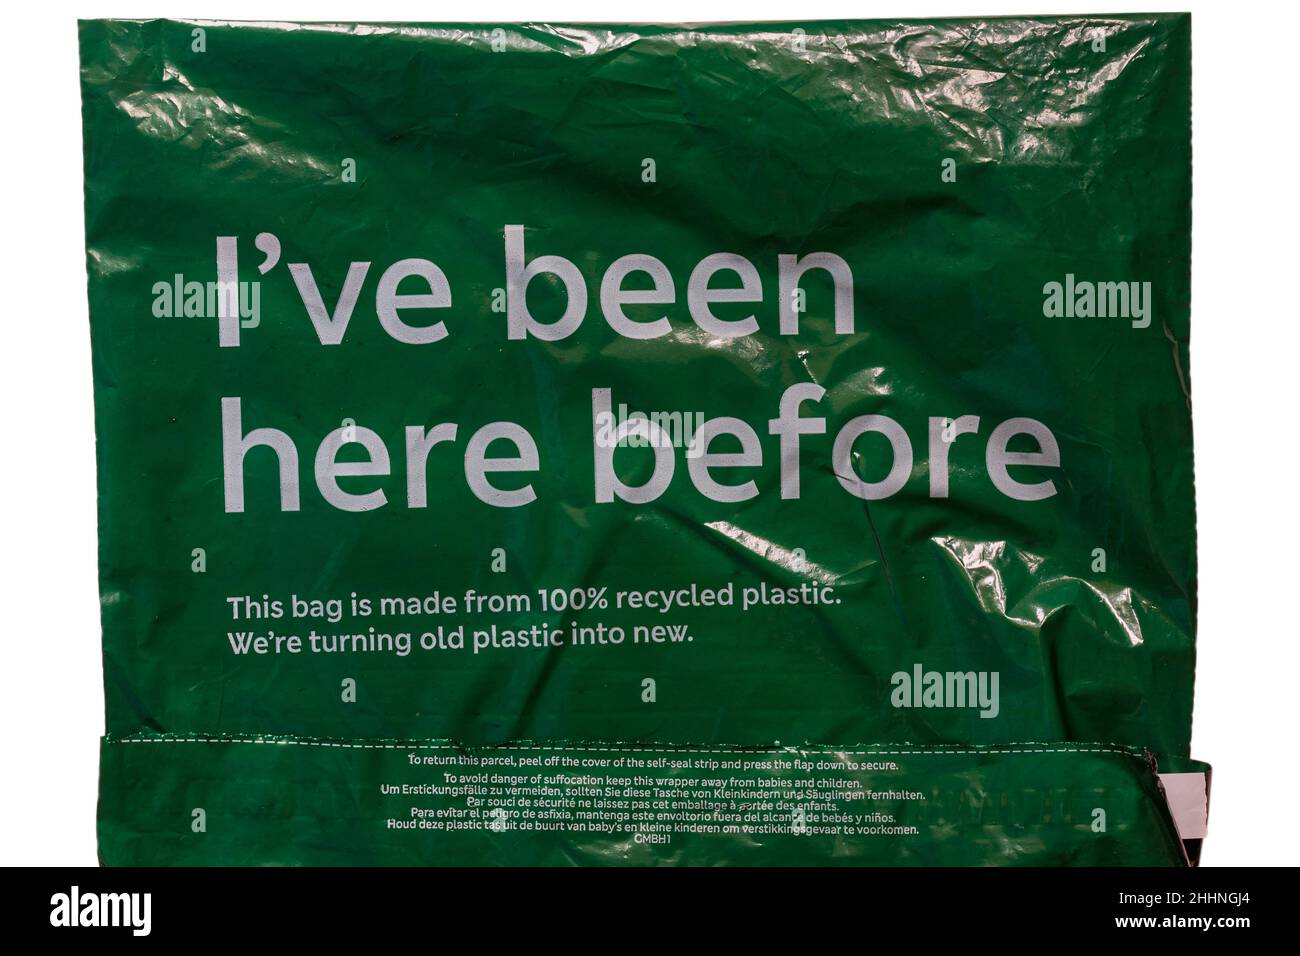 Spencer Devine Assam Market Bag Large - Made with 100% Recycled Plastic Plum